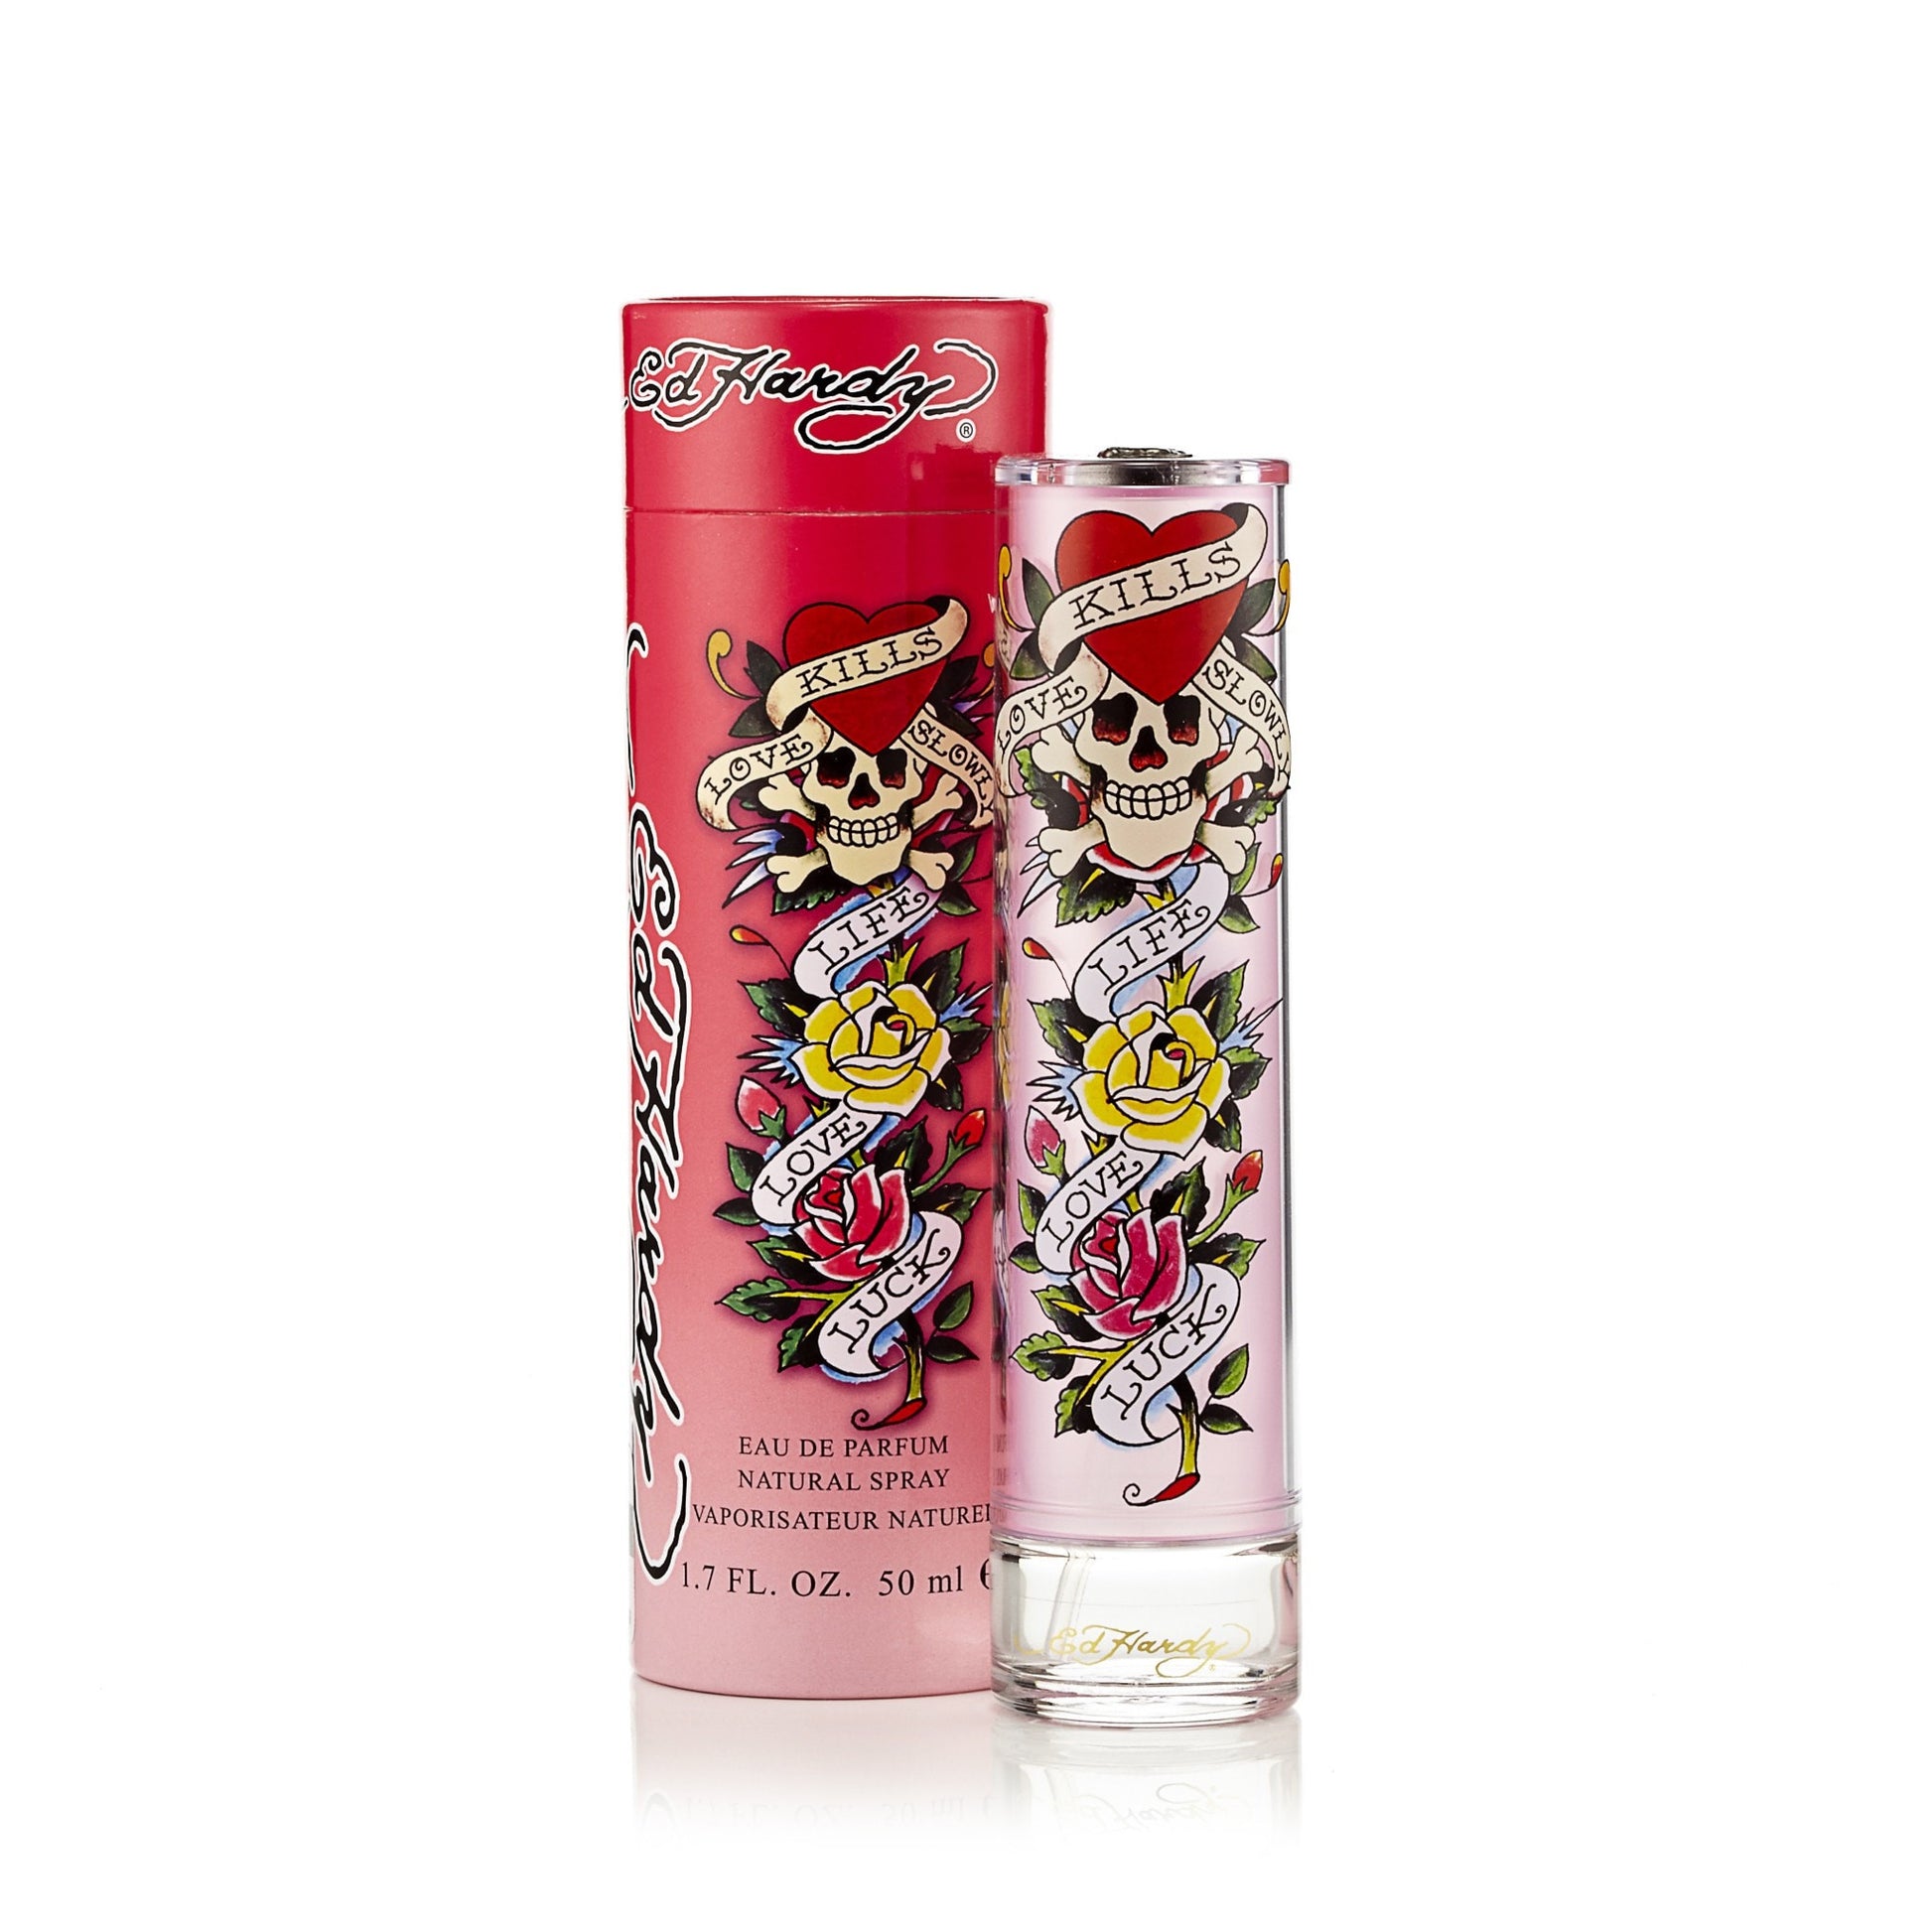  Ed Hardy Eau de Parfum Spray for Women by Christian Audigier 1.7 oz. Click to open in modal